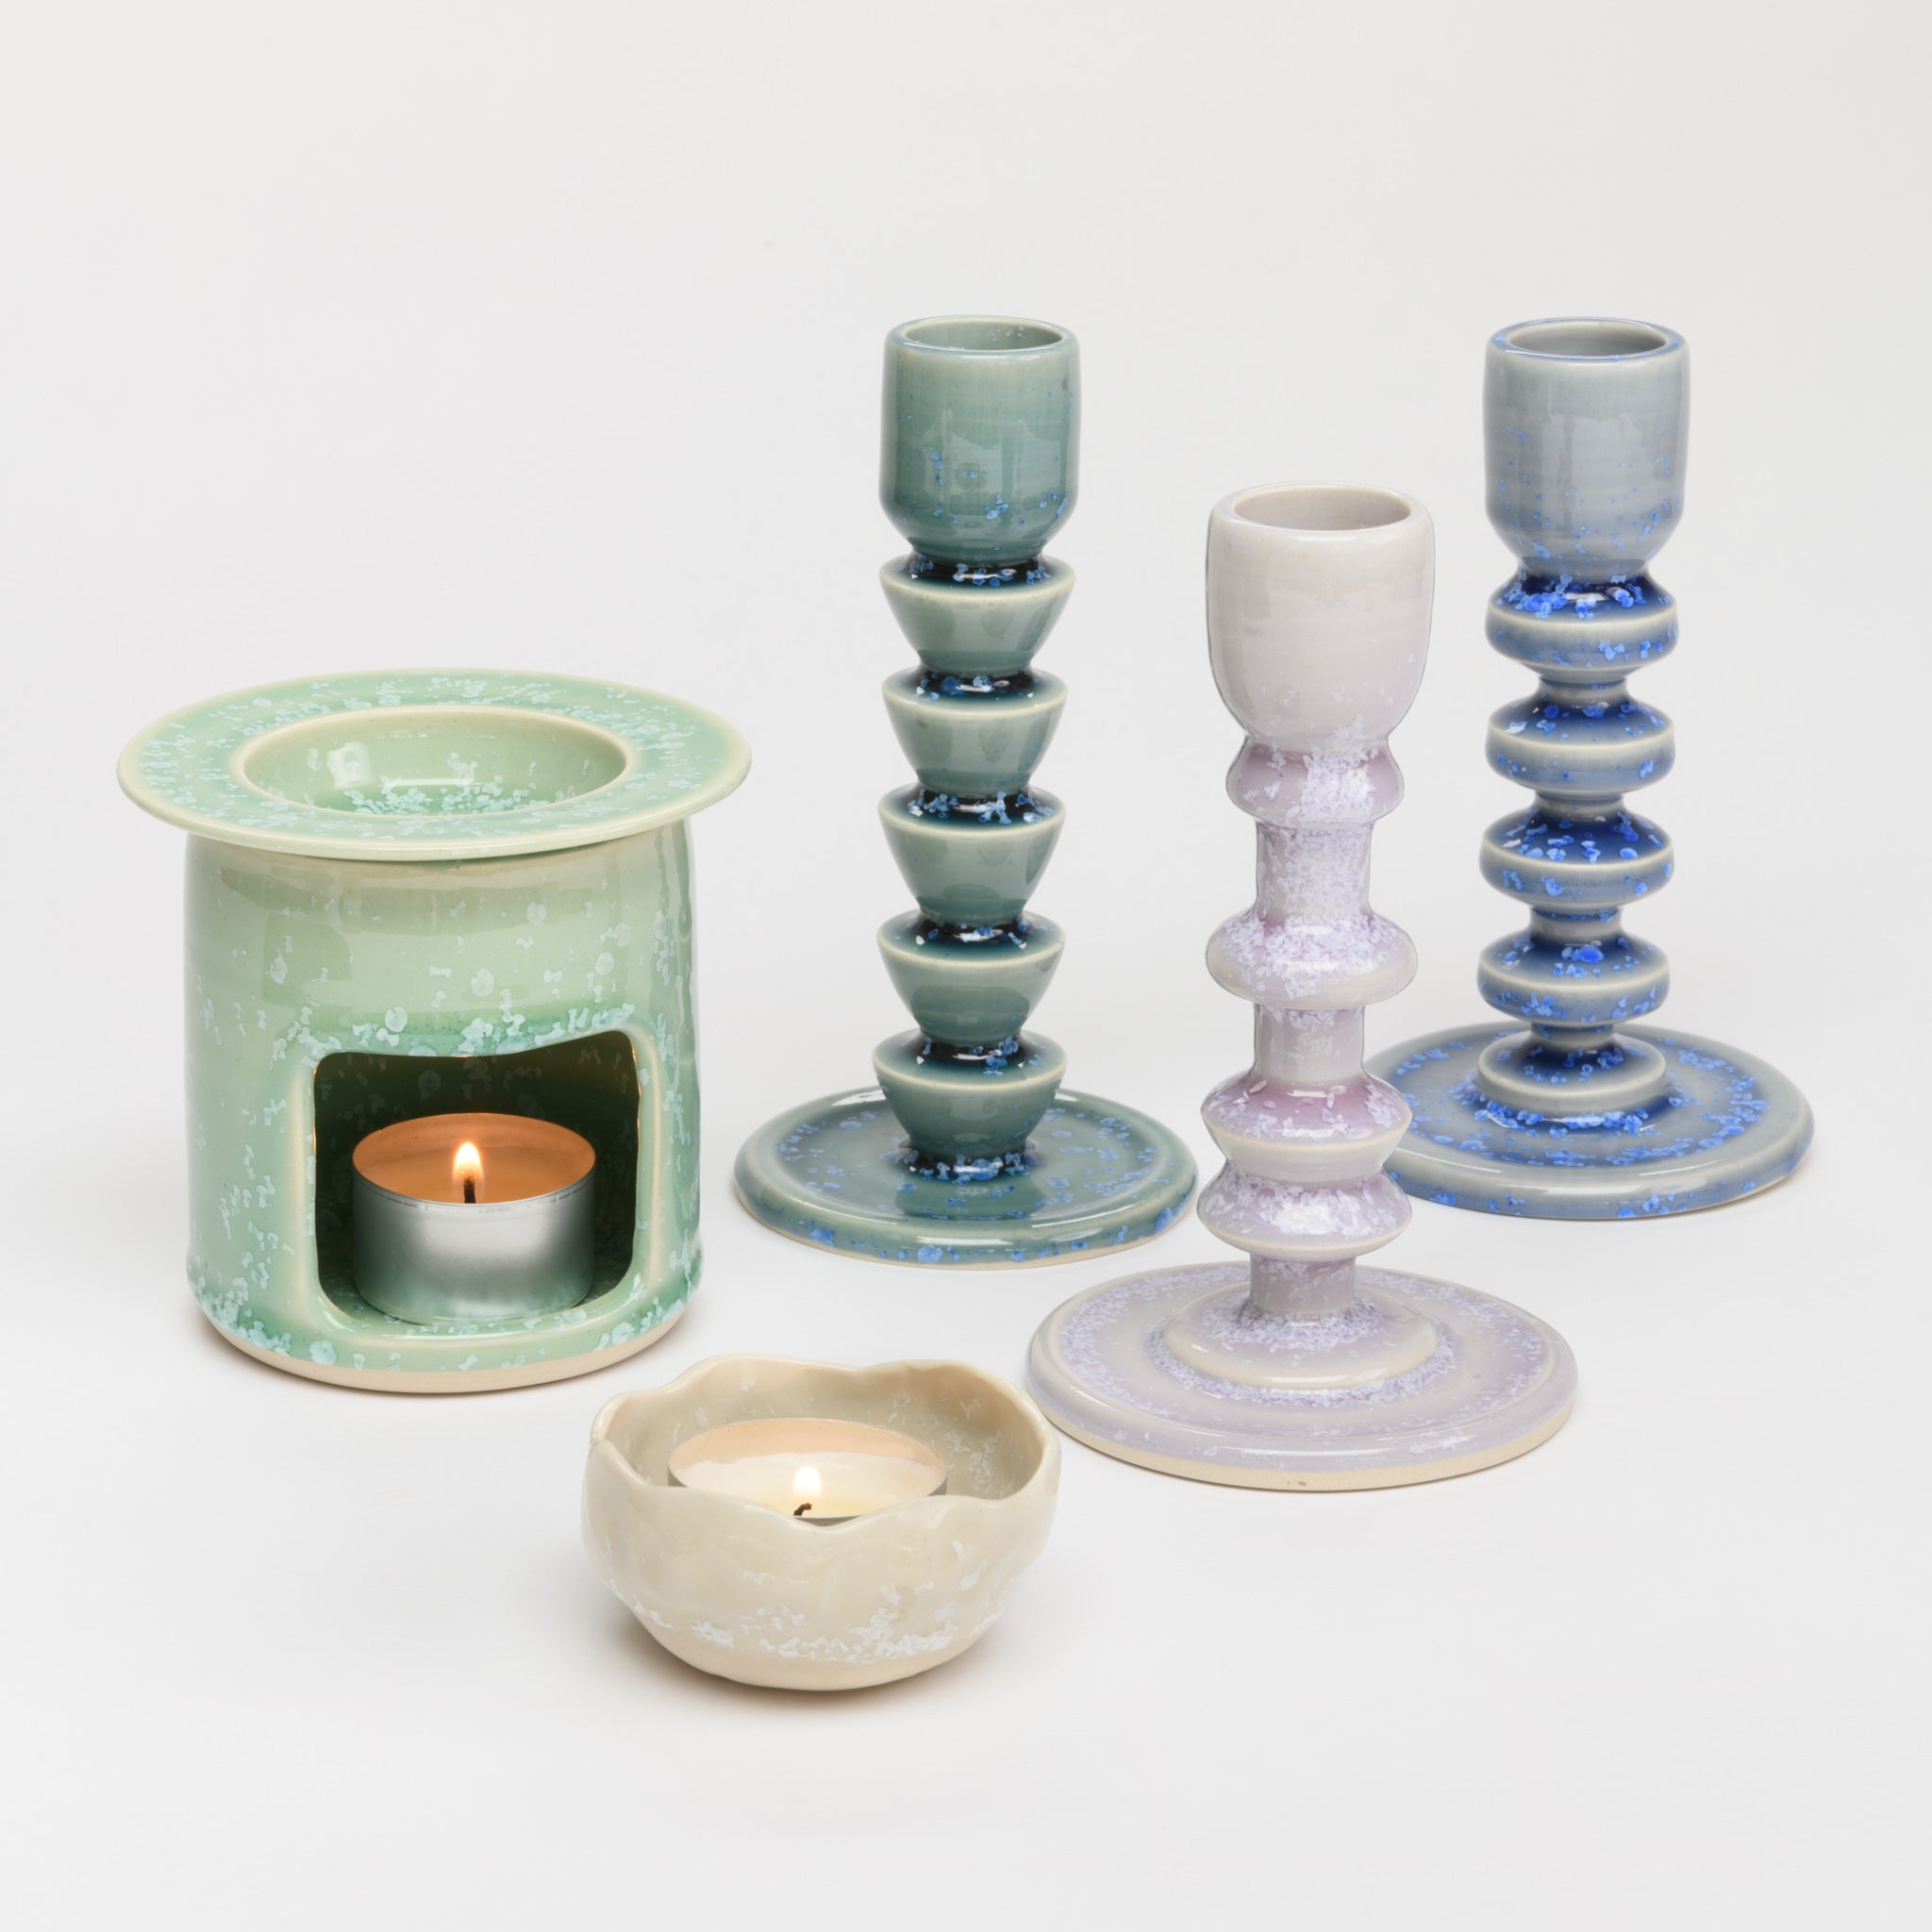 Ceramic tall candlesticks, tealight holders and oil wax burners